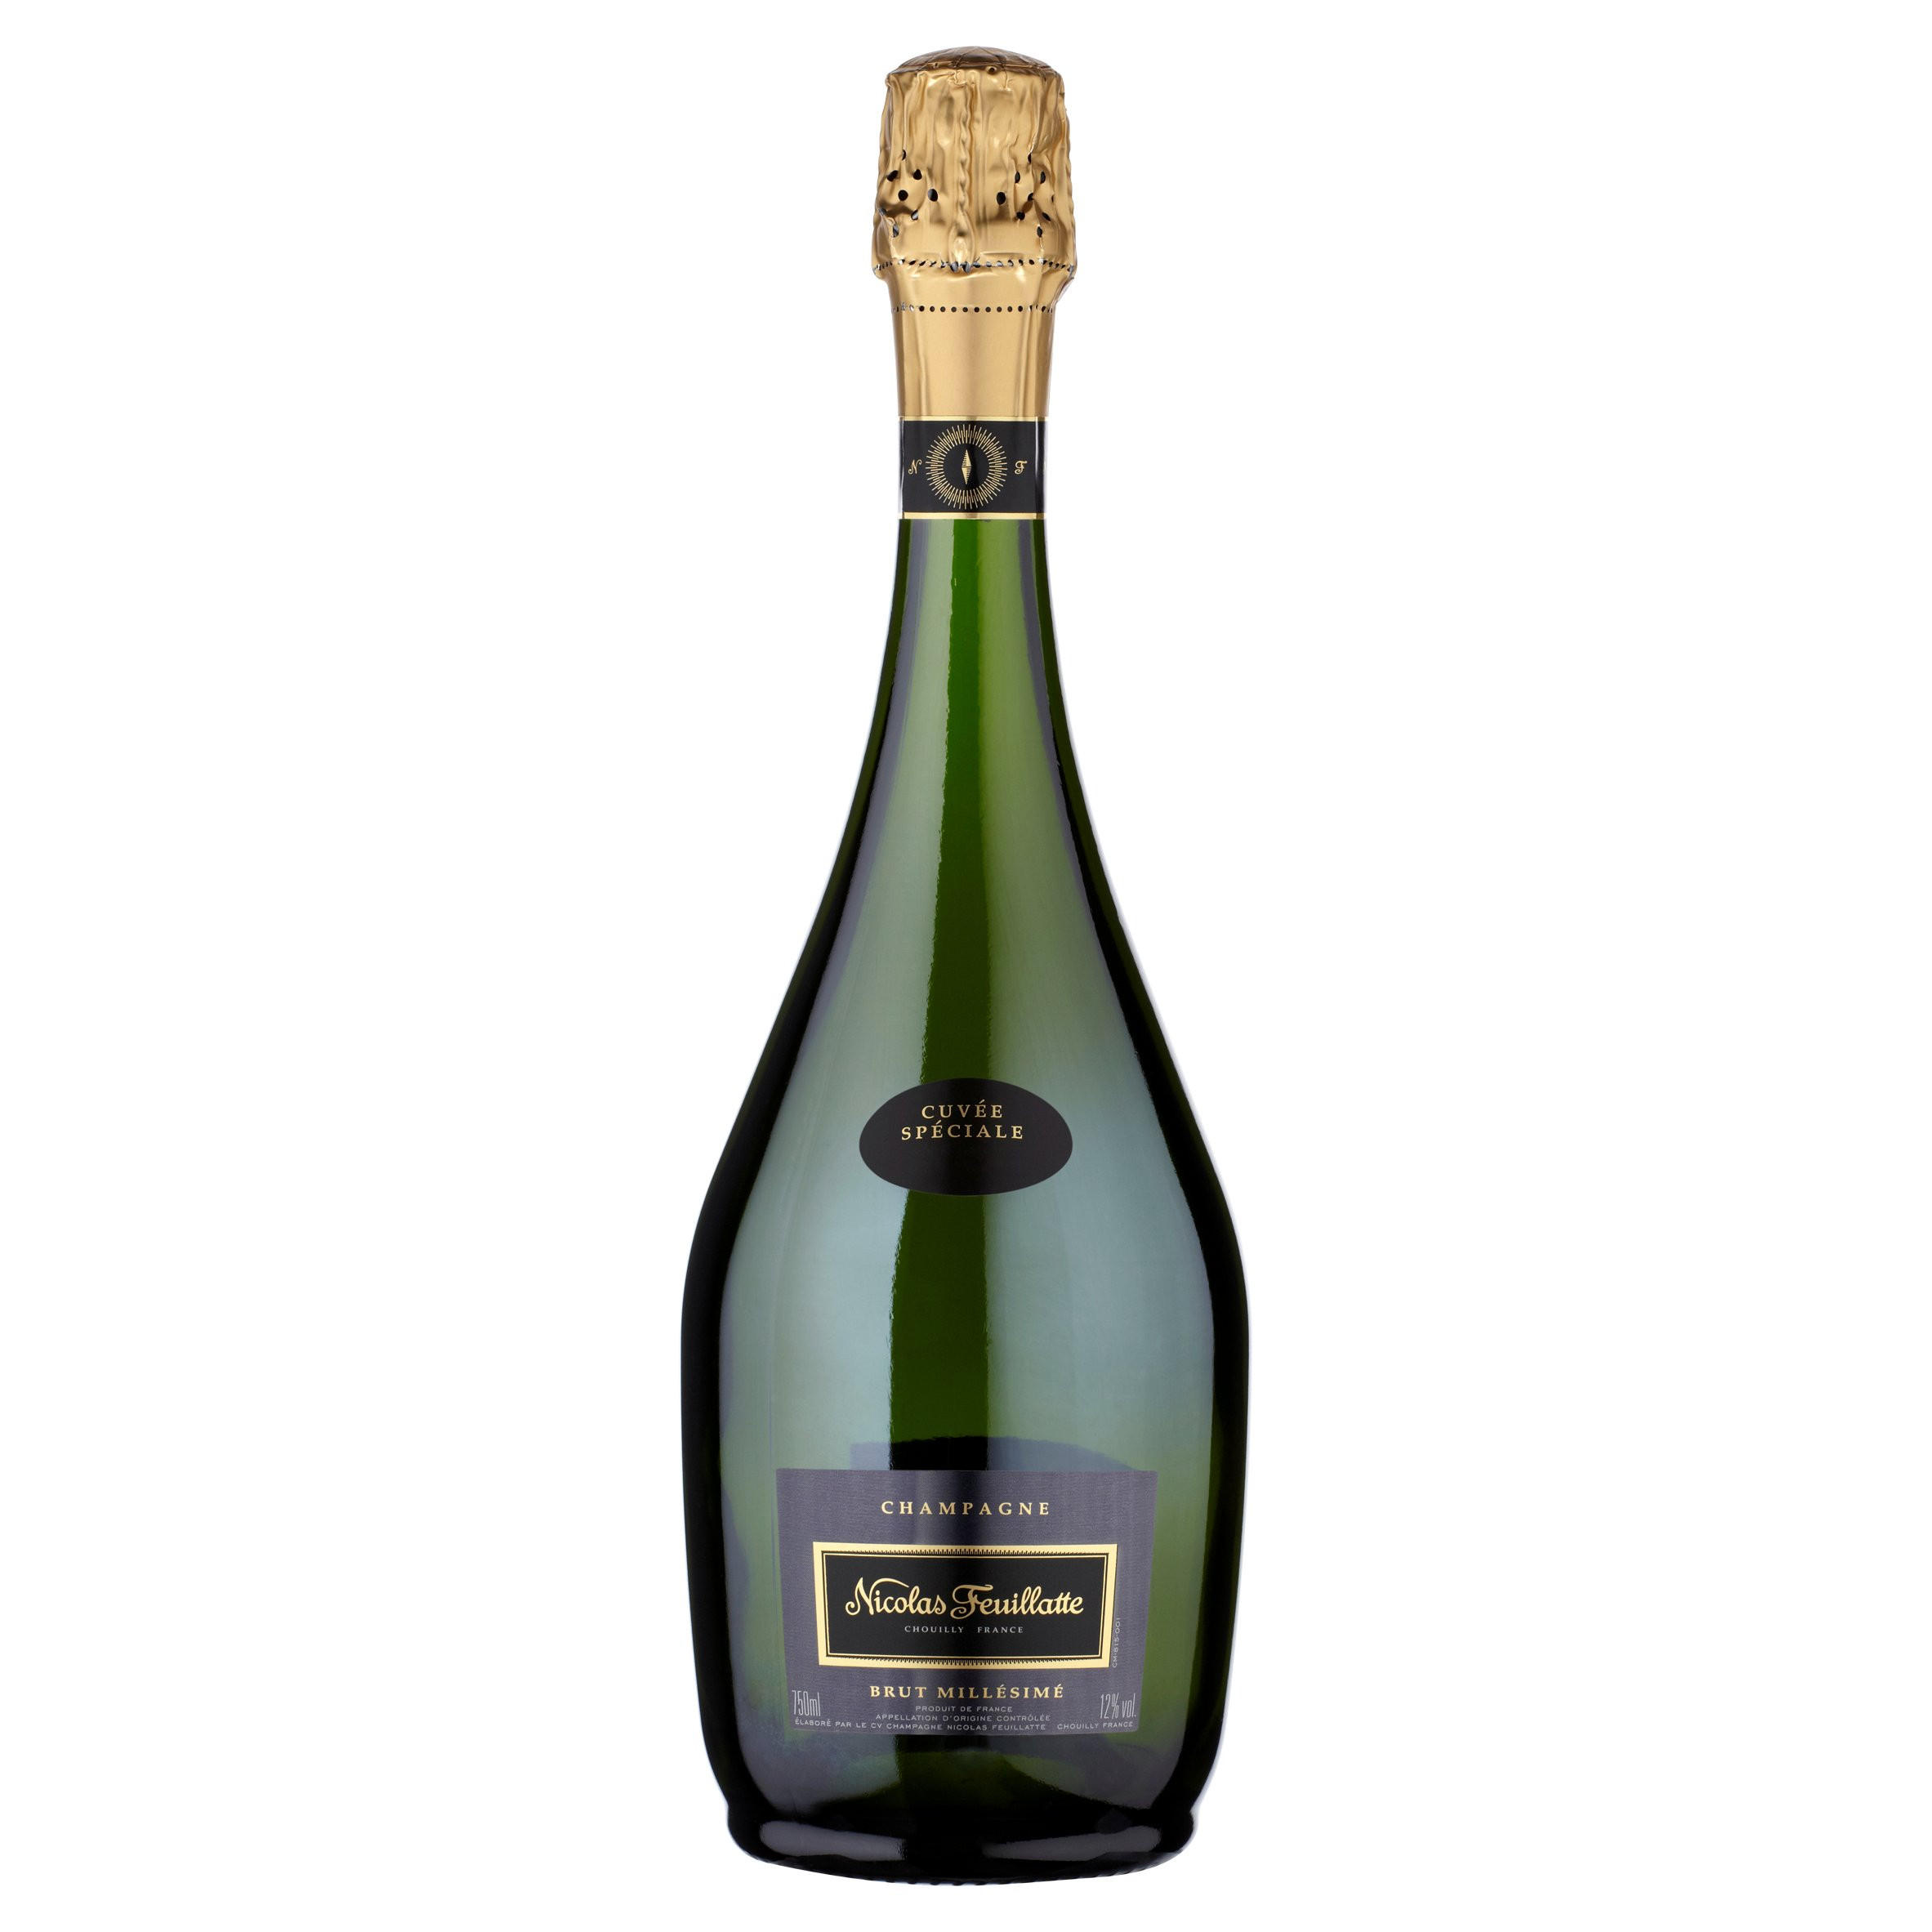 Nicolas Feuillate Millésime 750ml Foods Cuvee Champagne Wine | Iceland Spéciale | Sparkling Brut